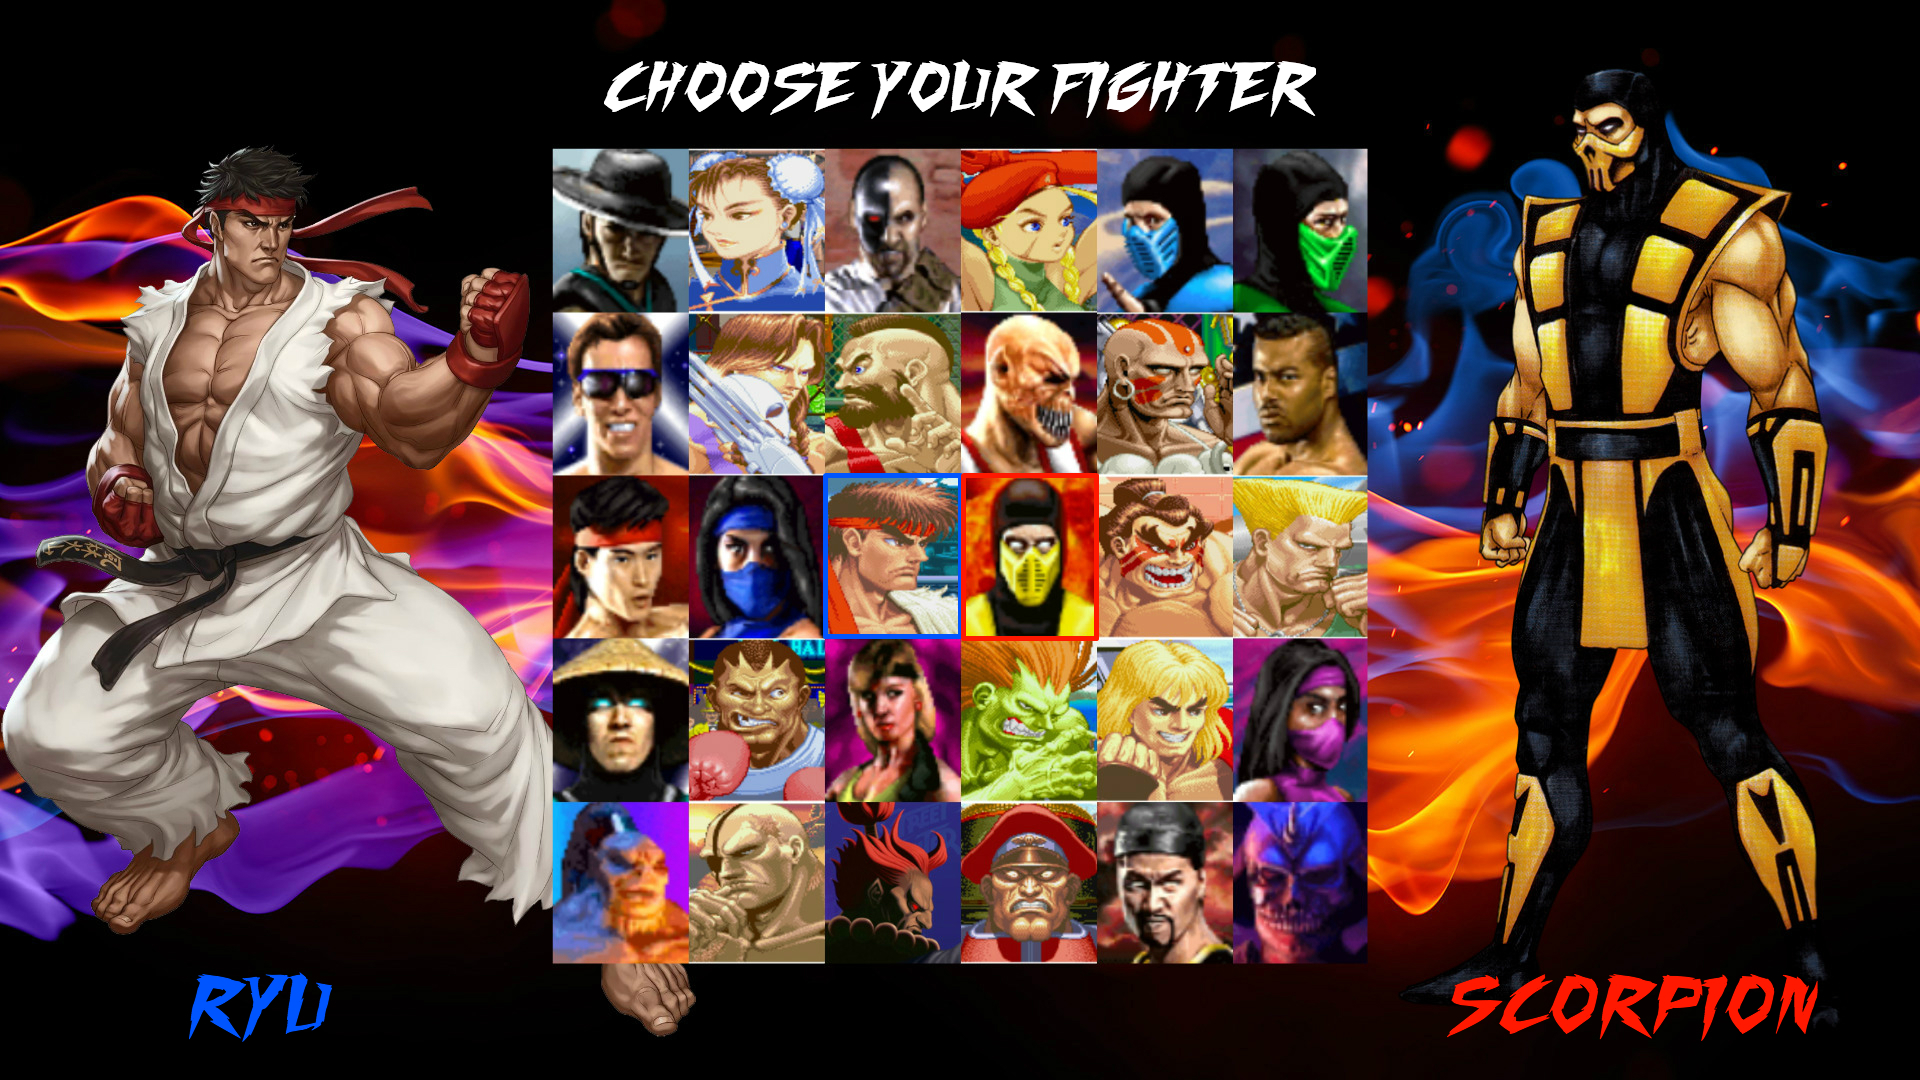 Street Fighter vs MK coming 2018!!!!